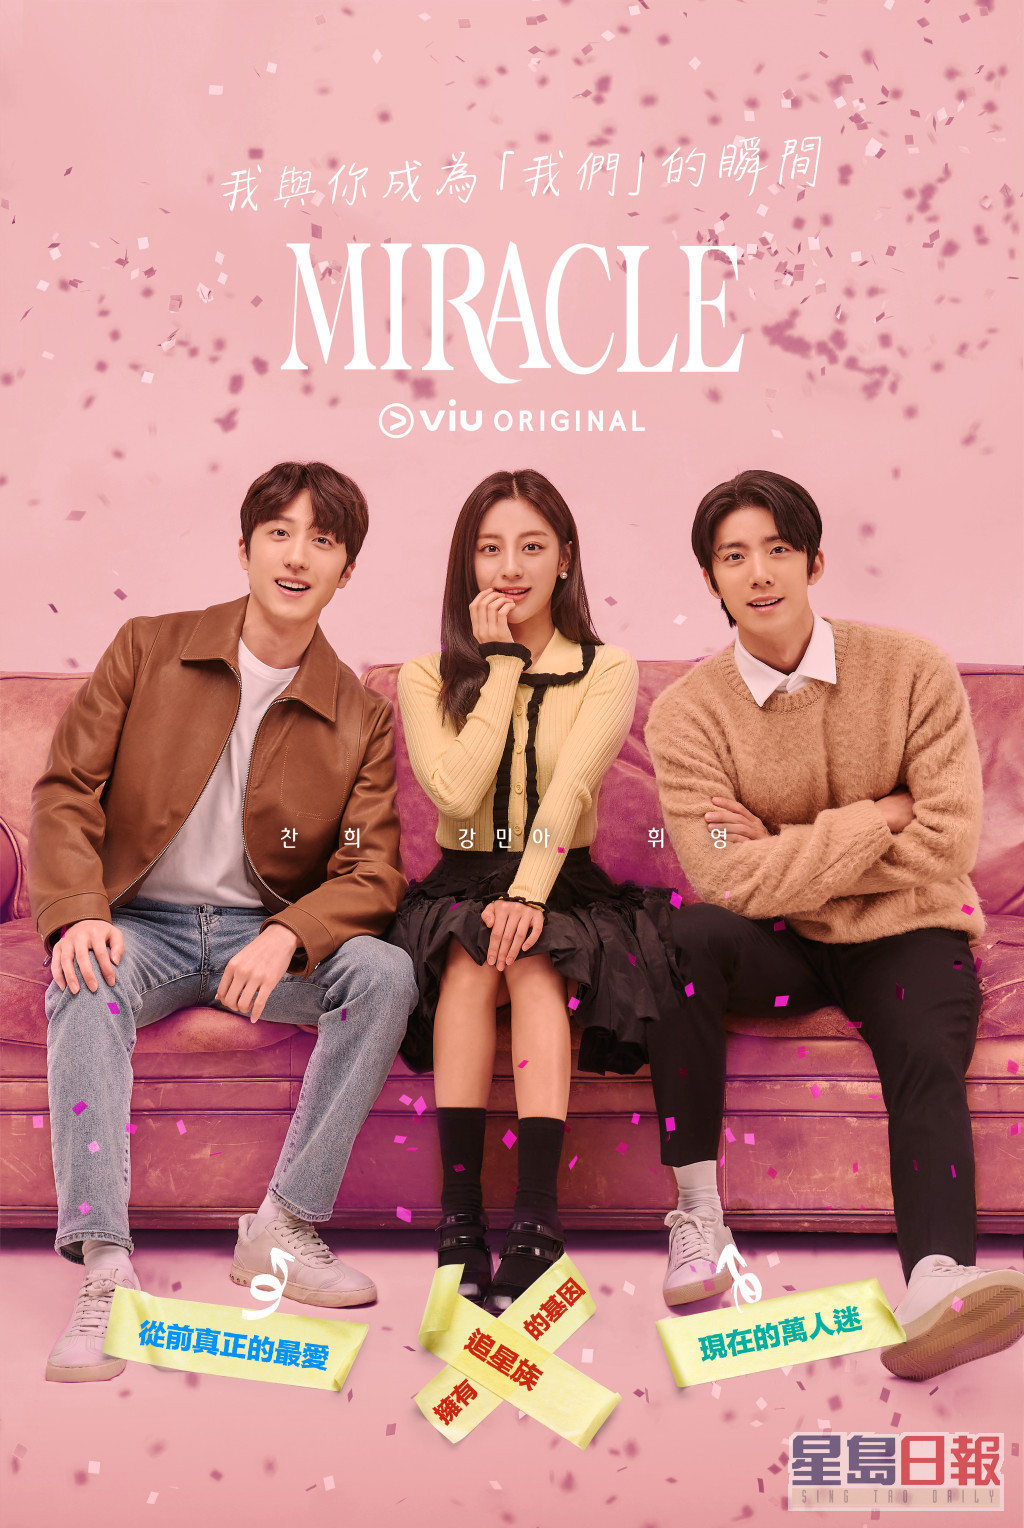 《Miracle》集合了三位青春演员澯熙、姜旻儿及辉映合作。